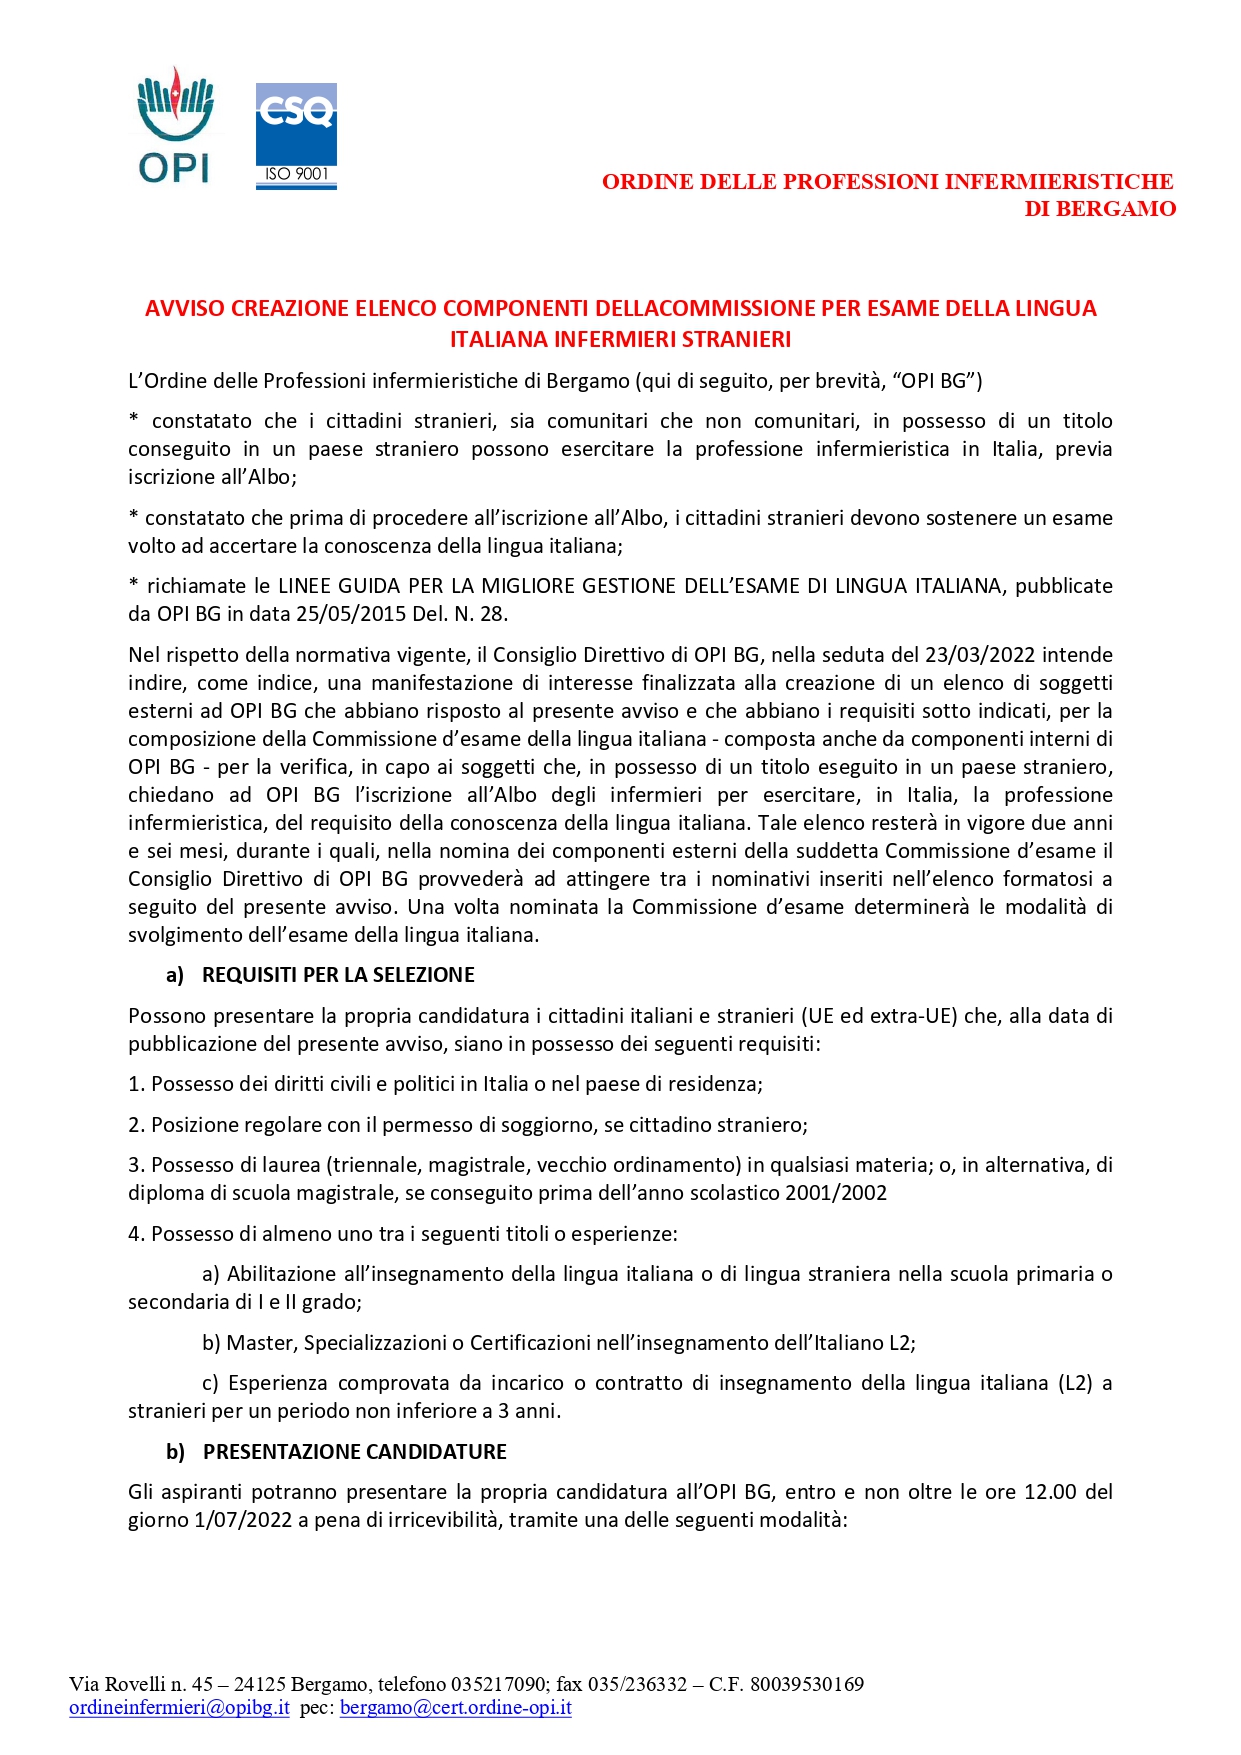 Manifestazione di interesse per la creazione di un elenco di esperti per esami di italiano per infermieri stranieri